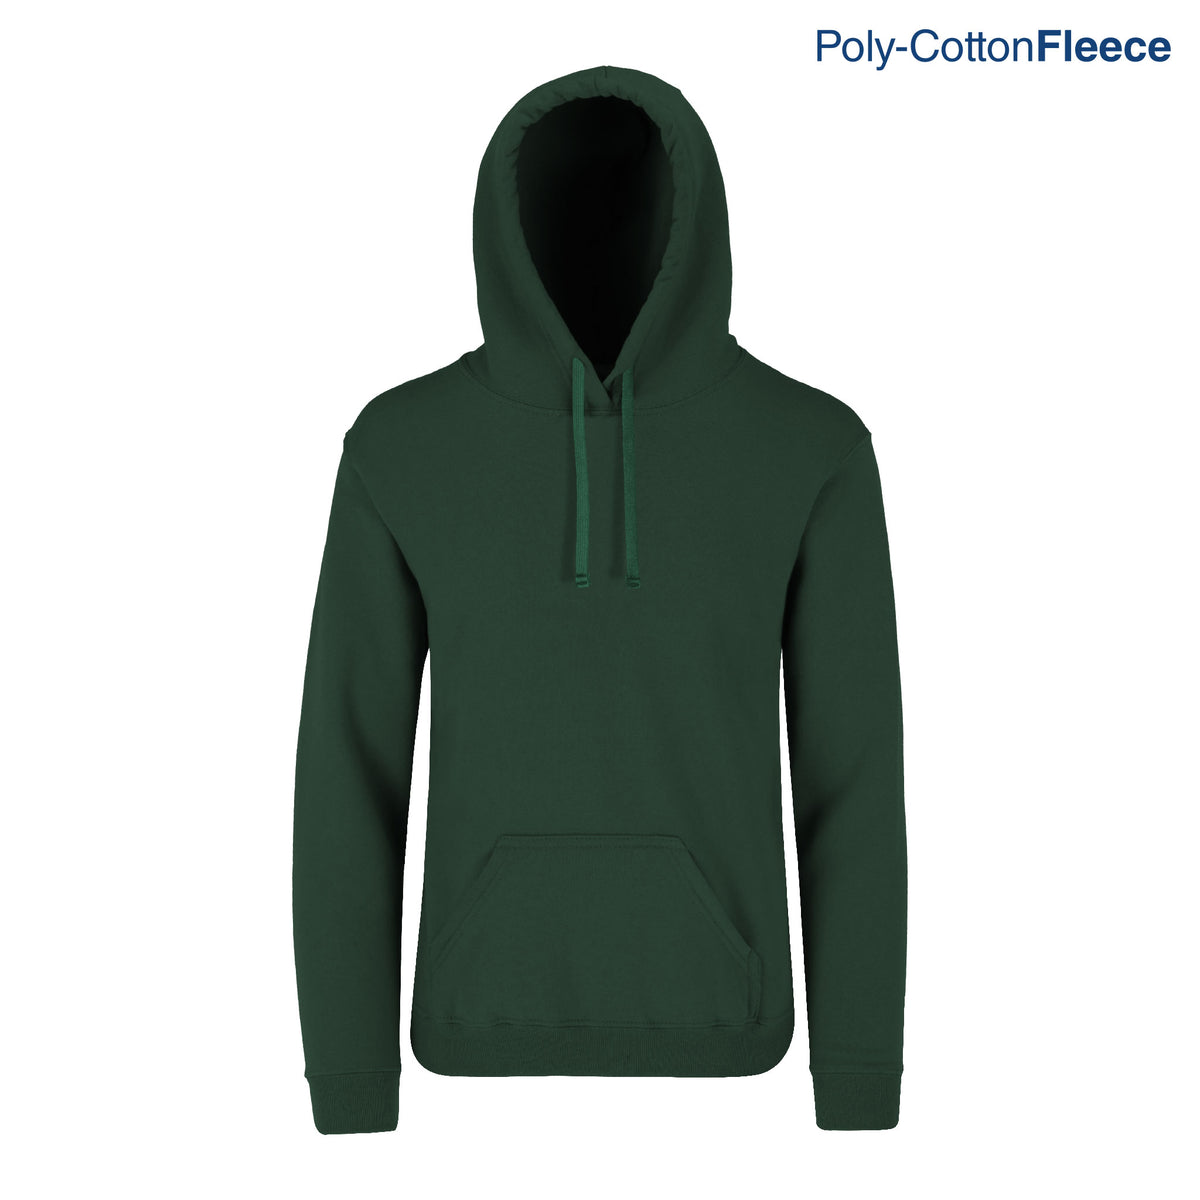 Adult’s Unisex Hooded Sweatshirt With Kangaroo Pocket (Forest Green ...